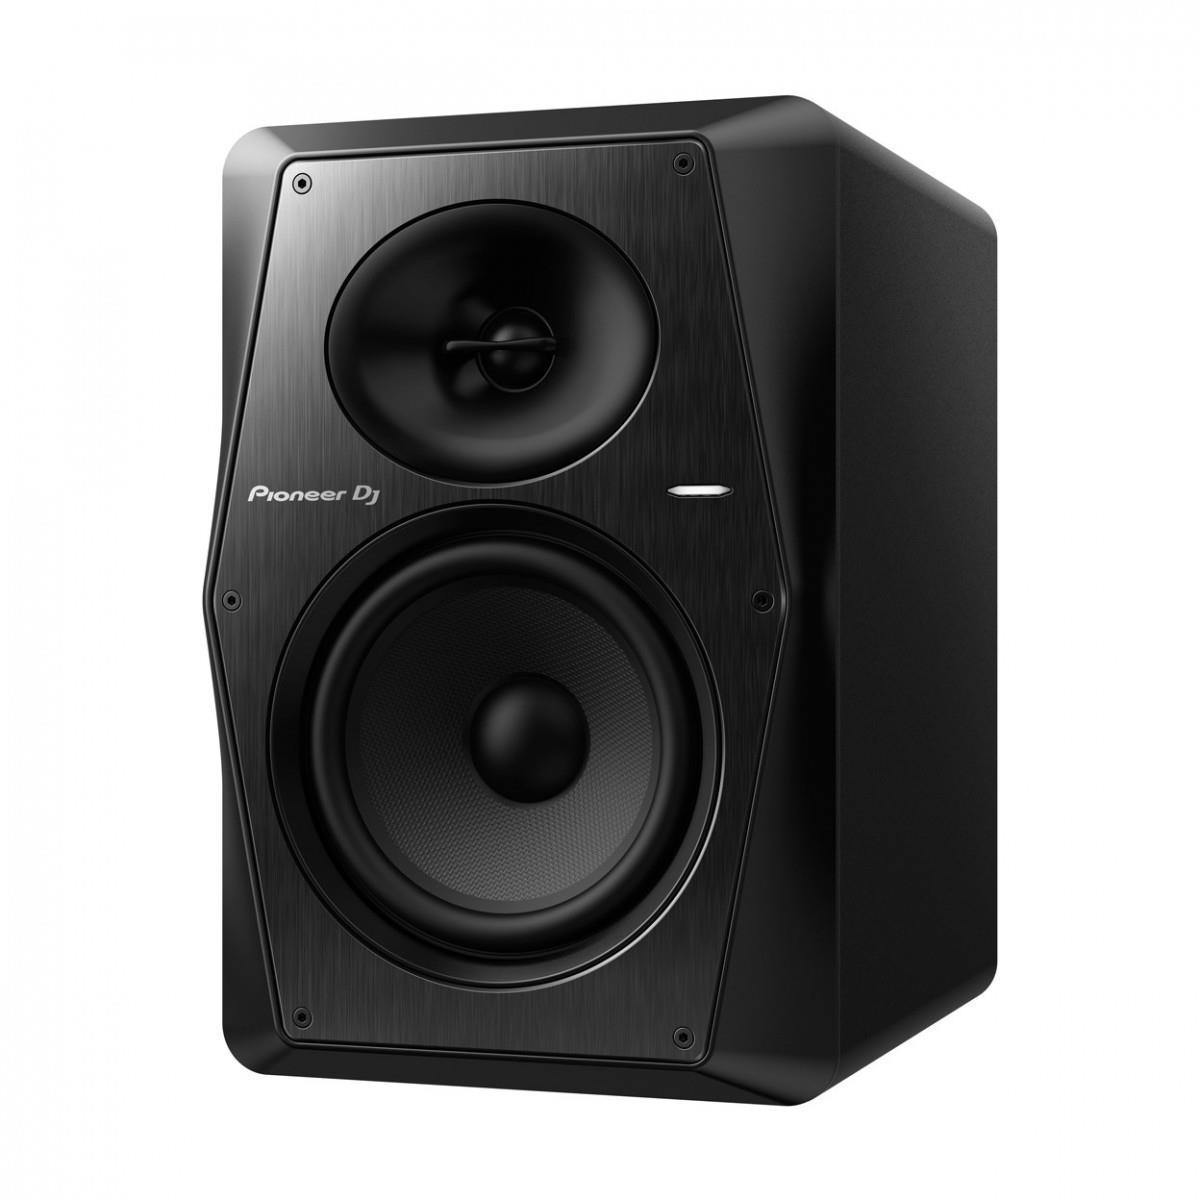 2 x Pioneer VM-70 6.5"Active Monitor Speaker Black - DY Pro Audio